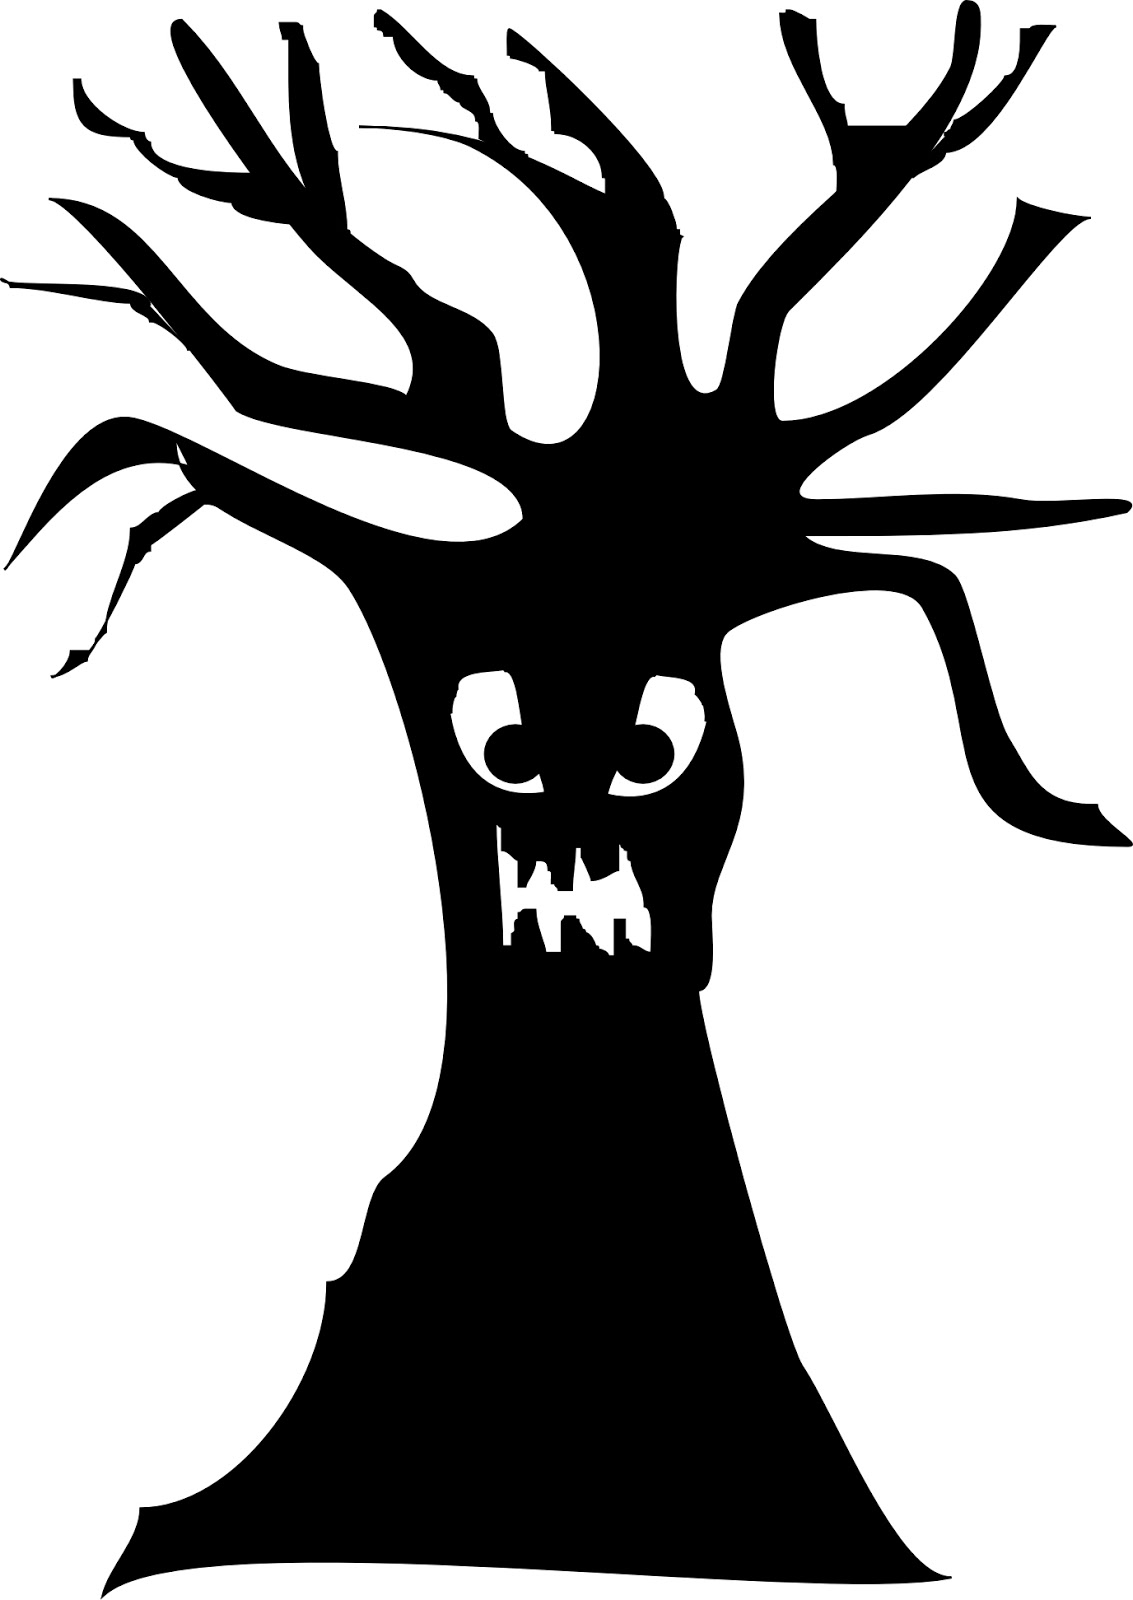 Scary+tree+1.jpg (1133×1600) | Halloween Fun Times | Pinterest